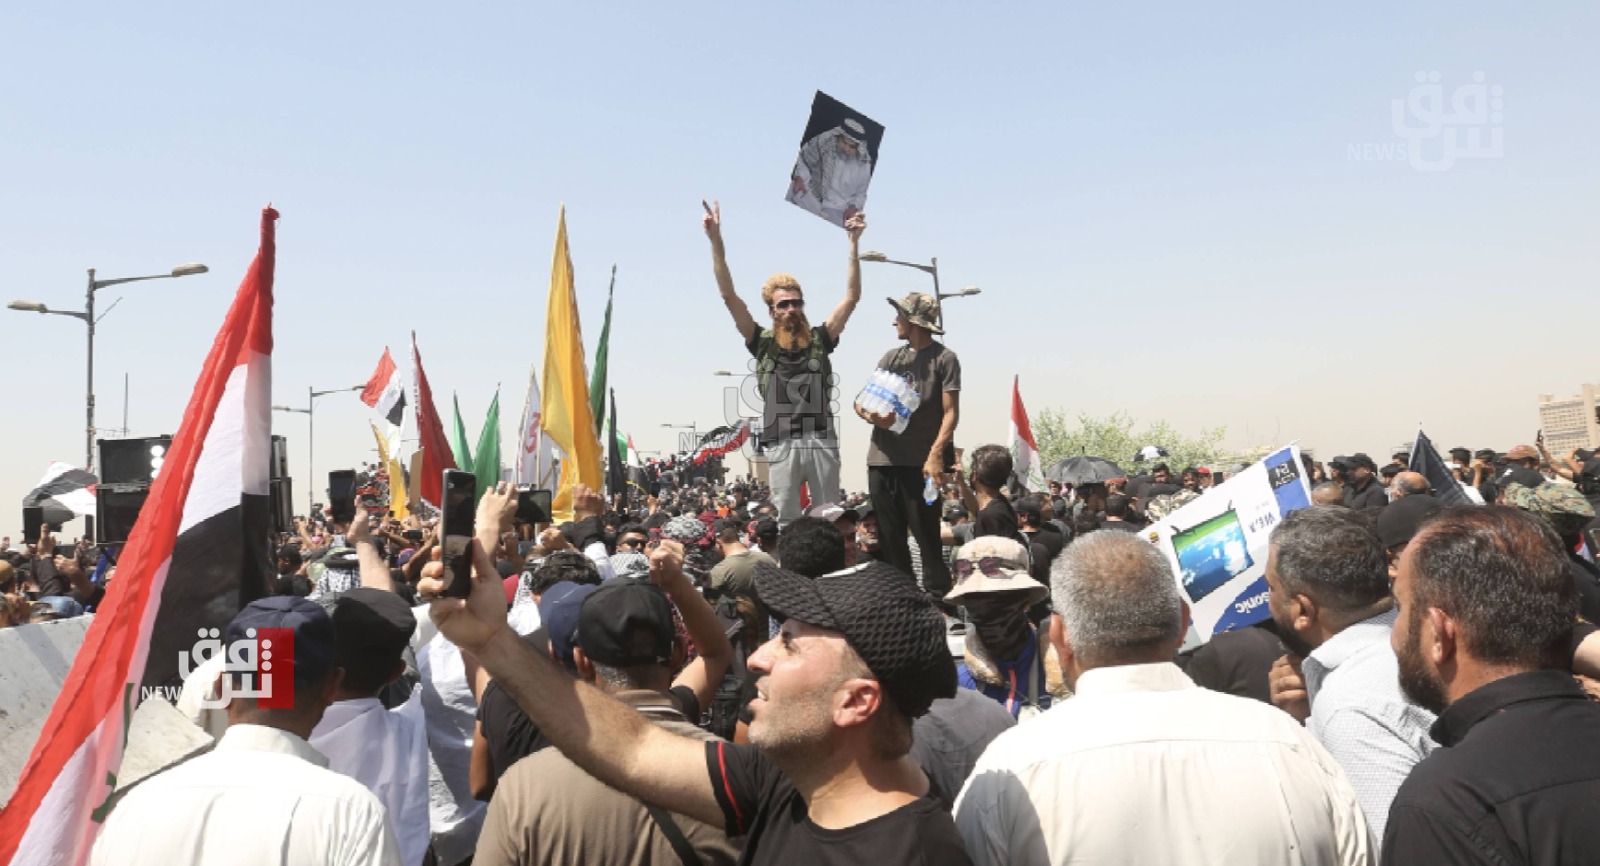 Protestors swarm into the Iraqi parliament building in Baghdad